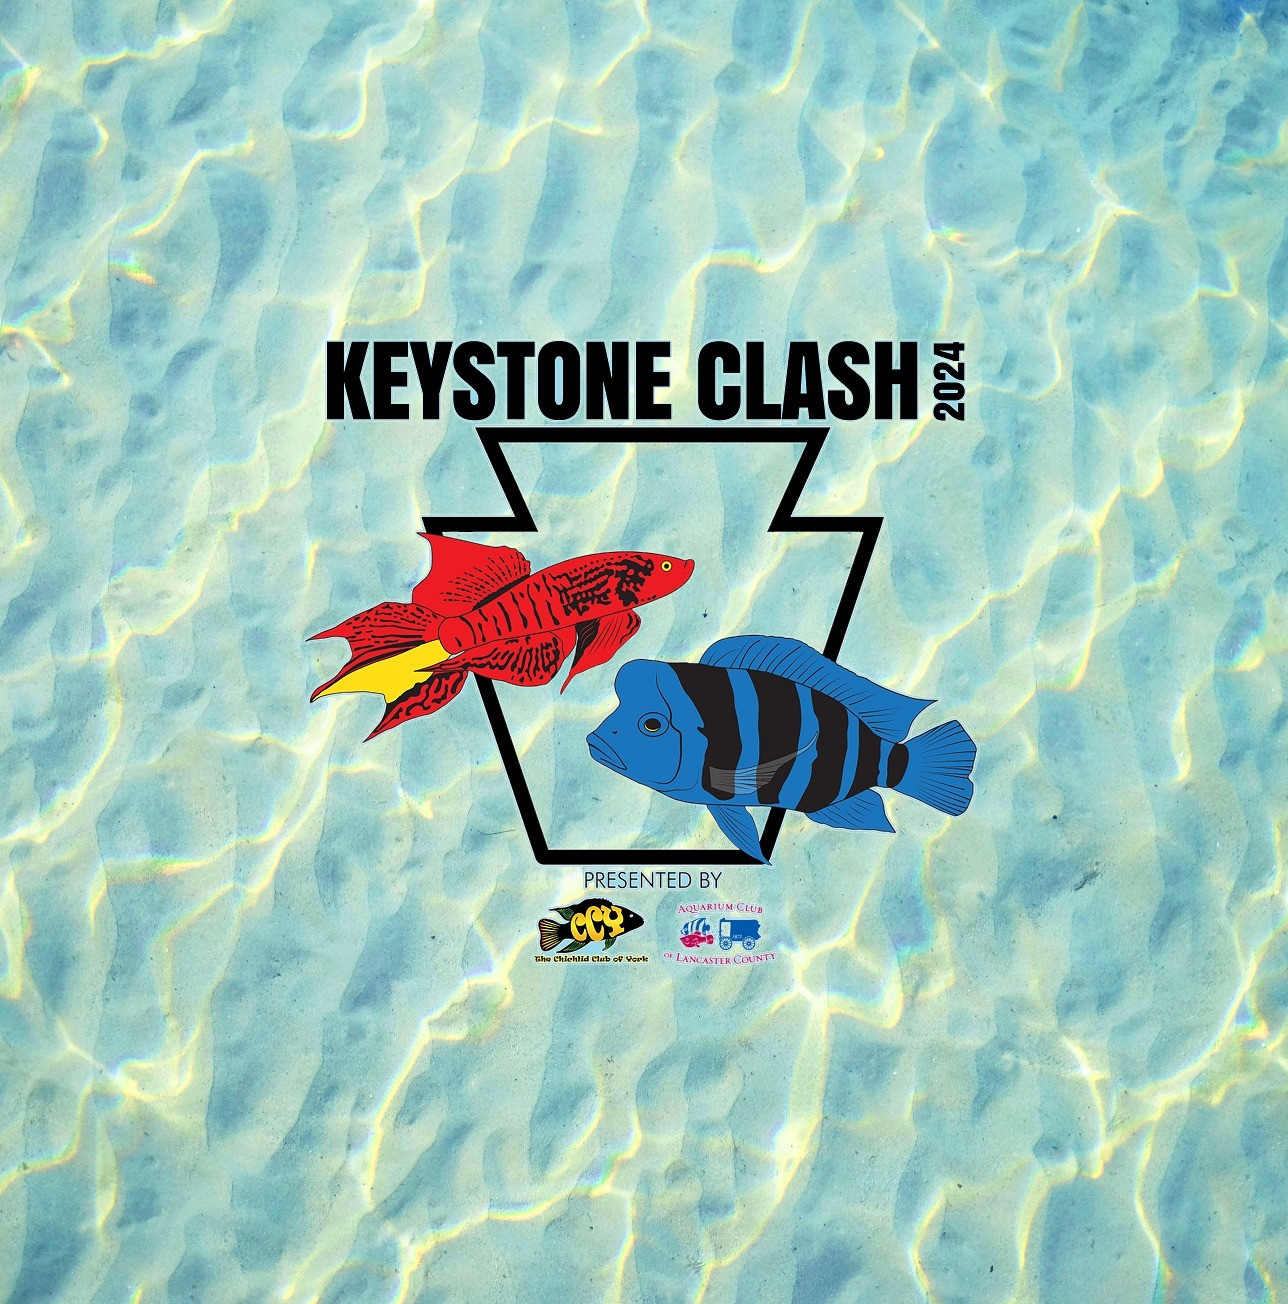 www.keystoneclash.com